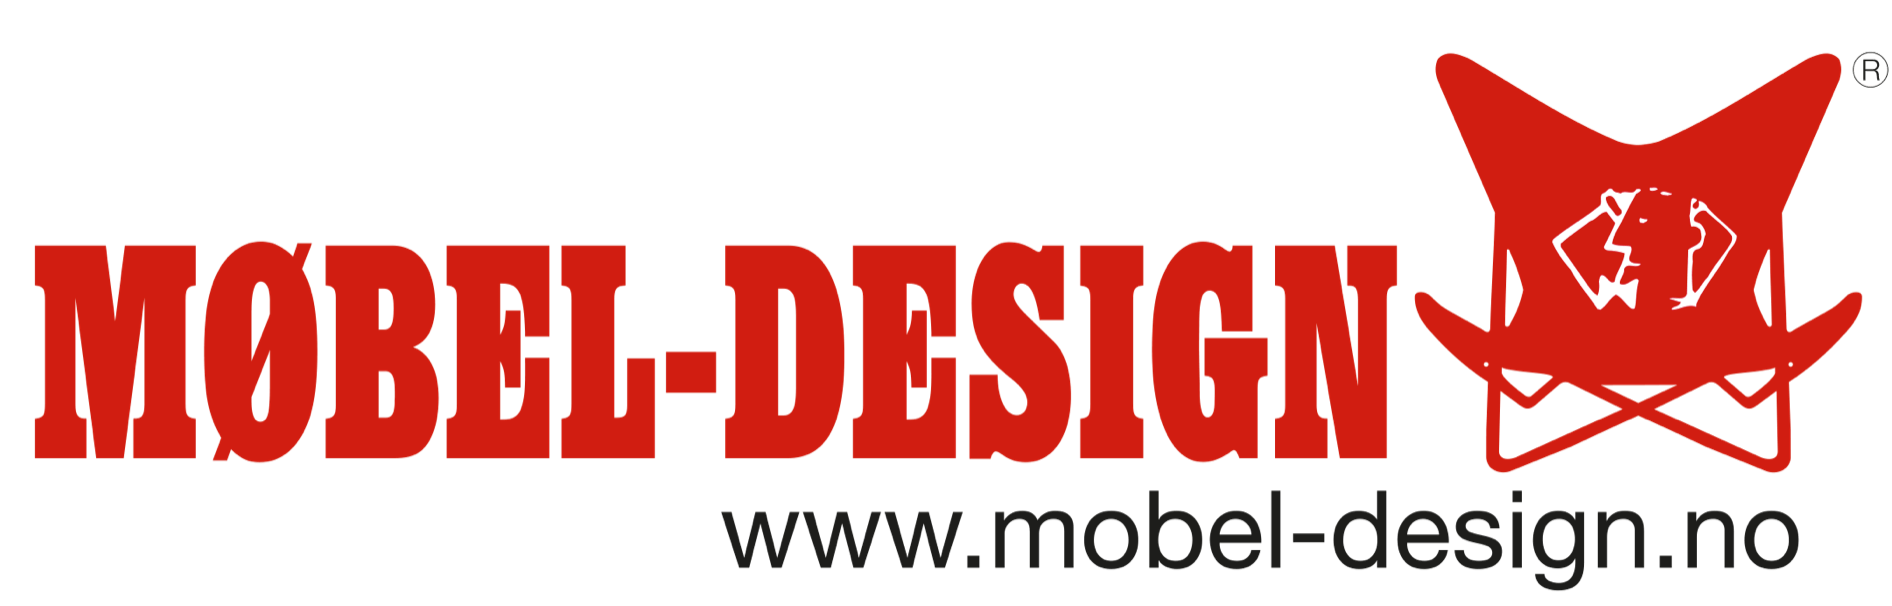 mobel-design